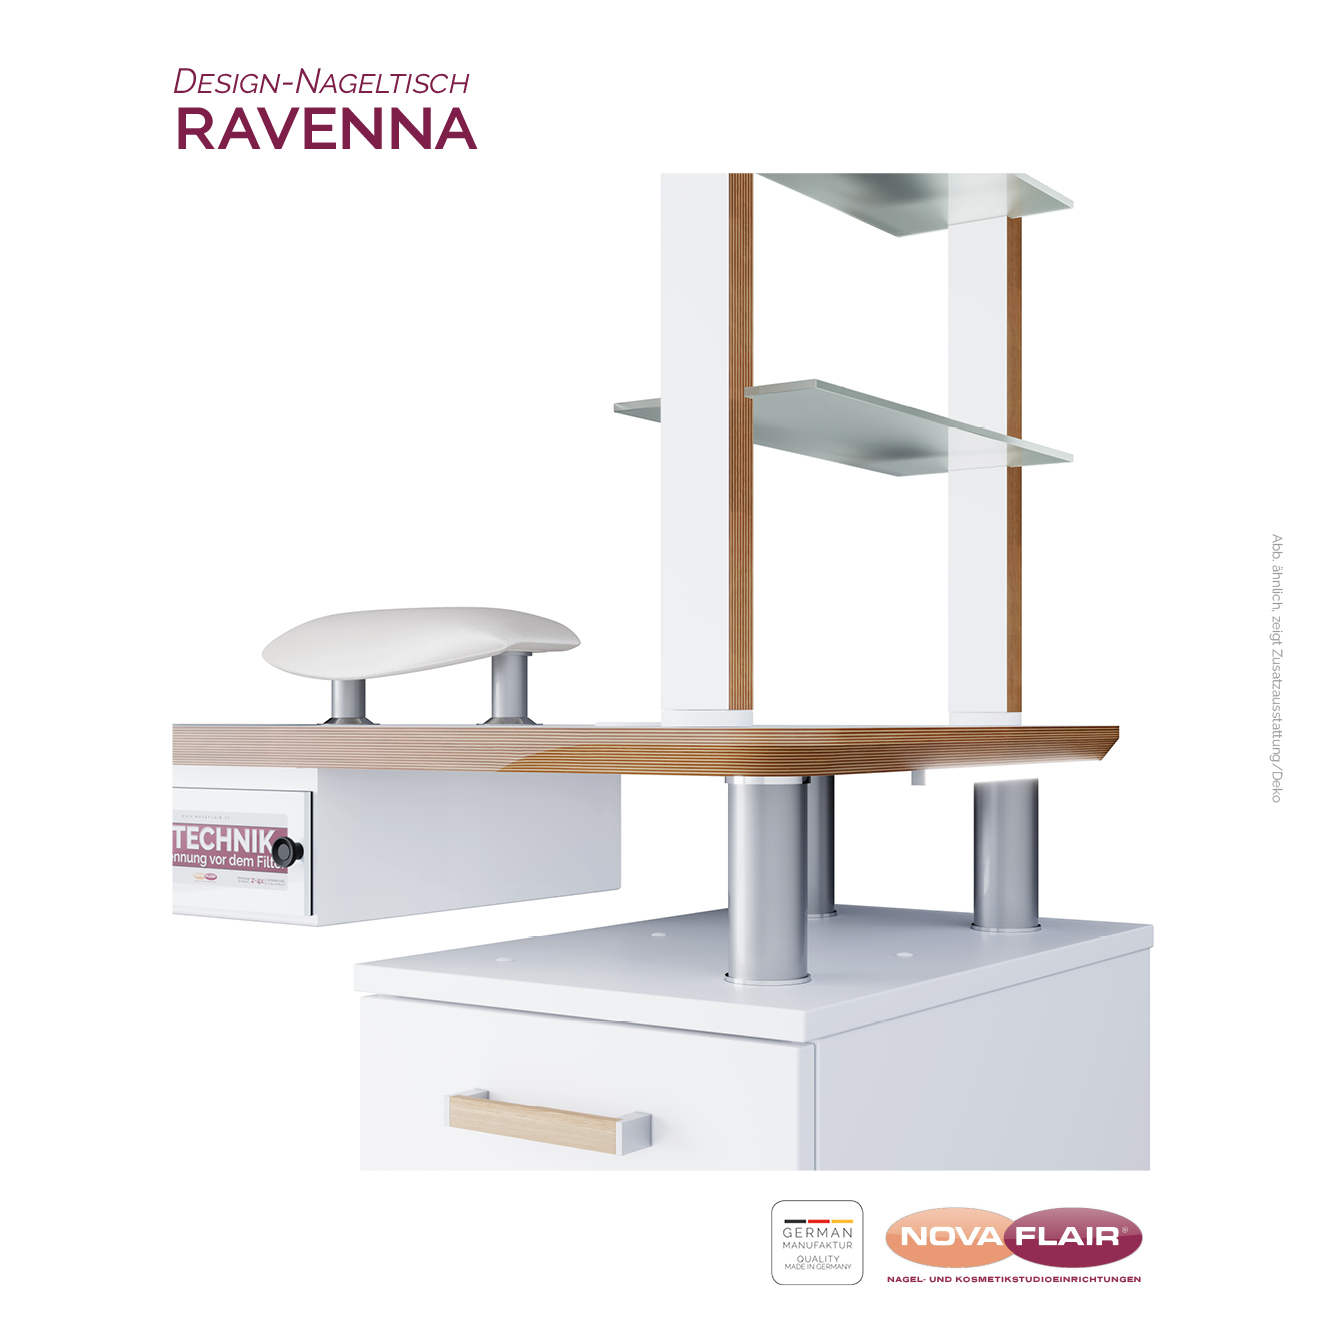 Nova Flair Design-Nageltisch Ravenna